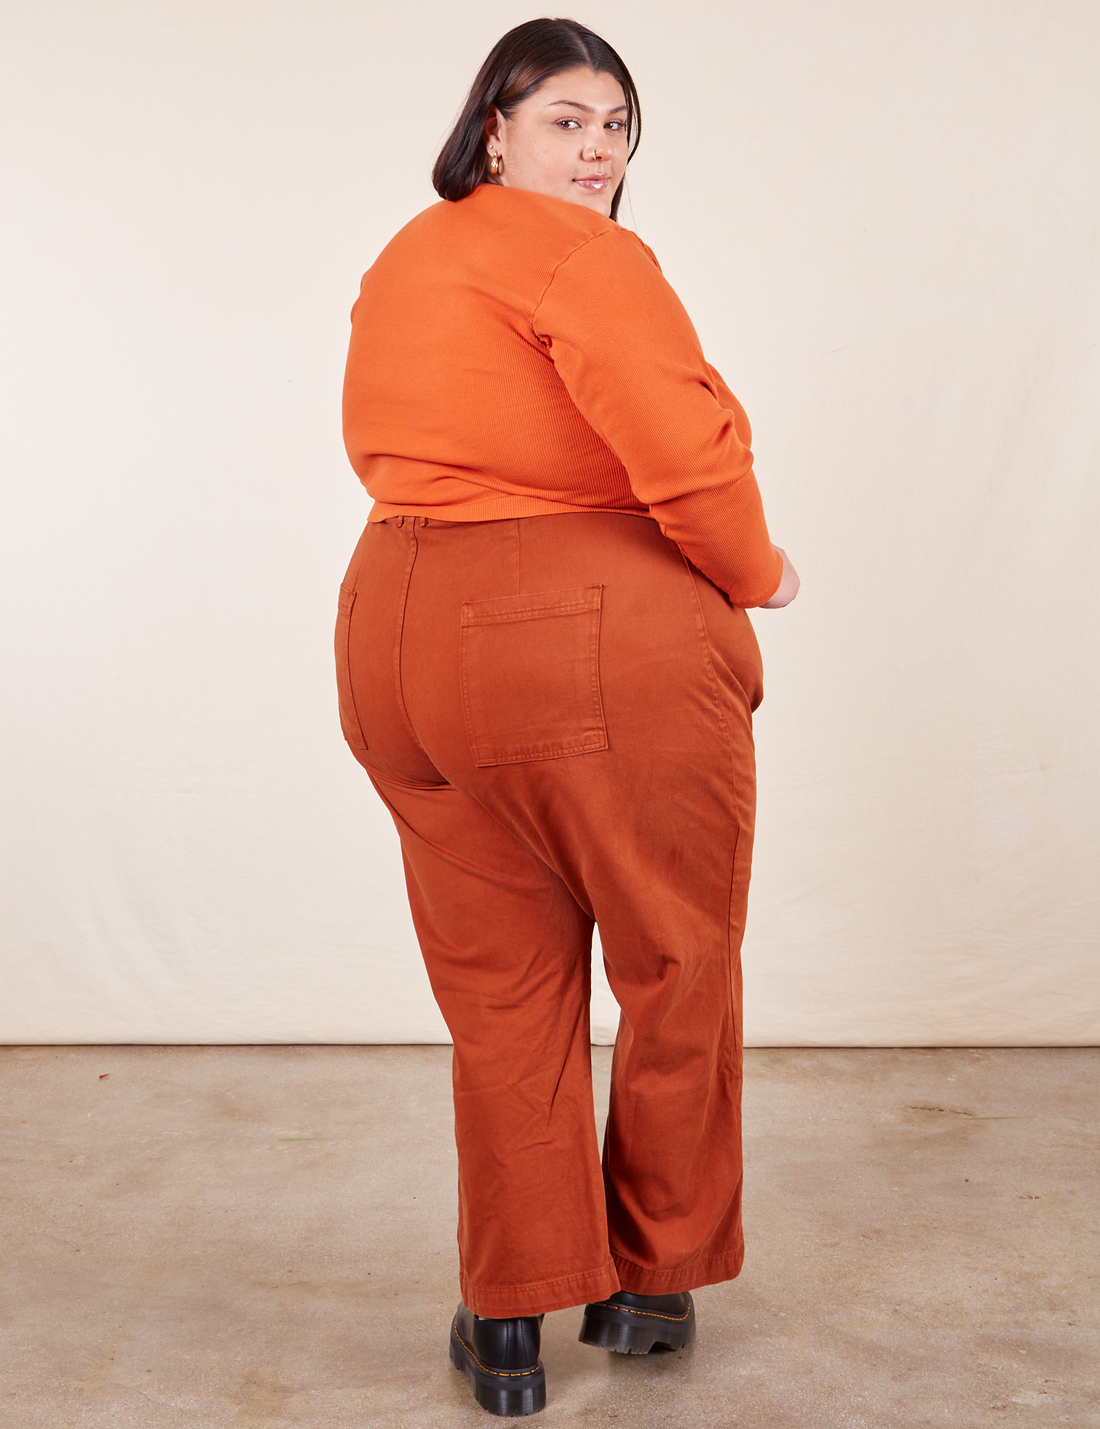 Western Pants in Burnt Terracotta back view on Sarita wearing burnt orange Long Sleeve V-Neck